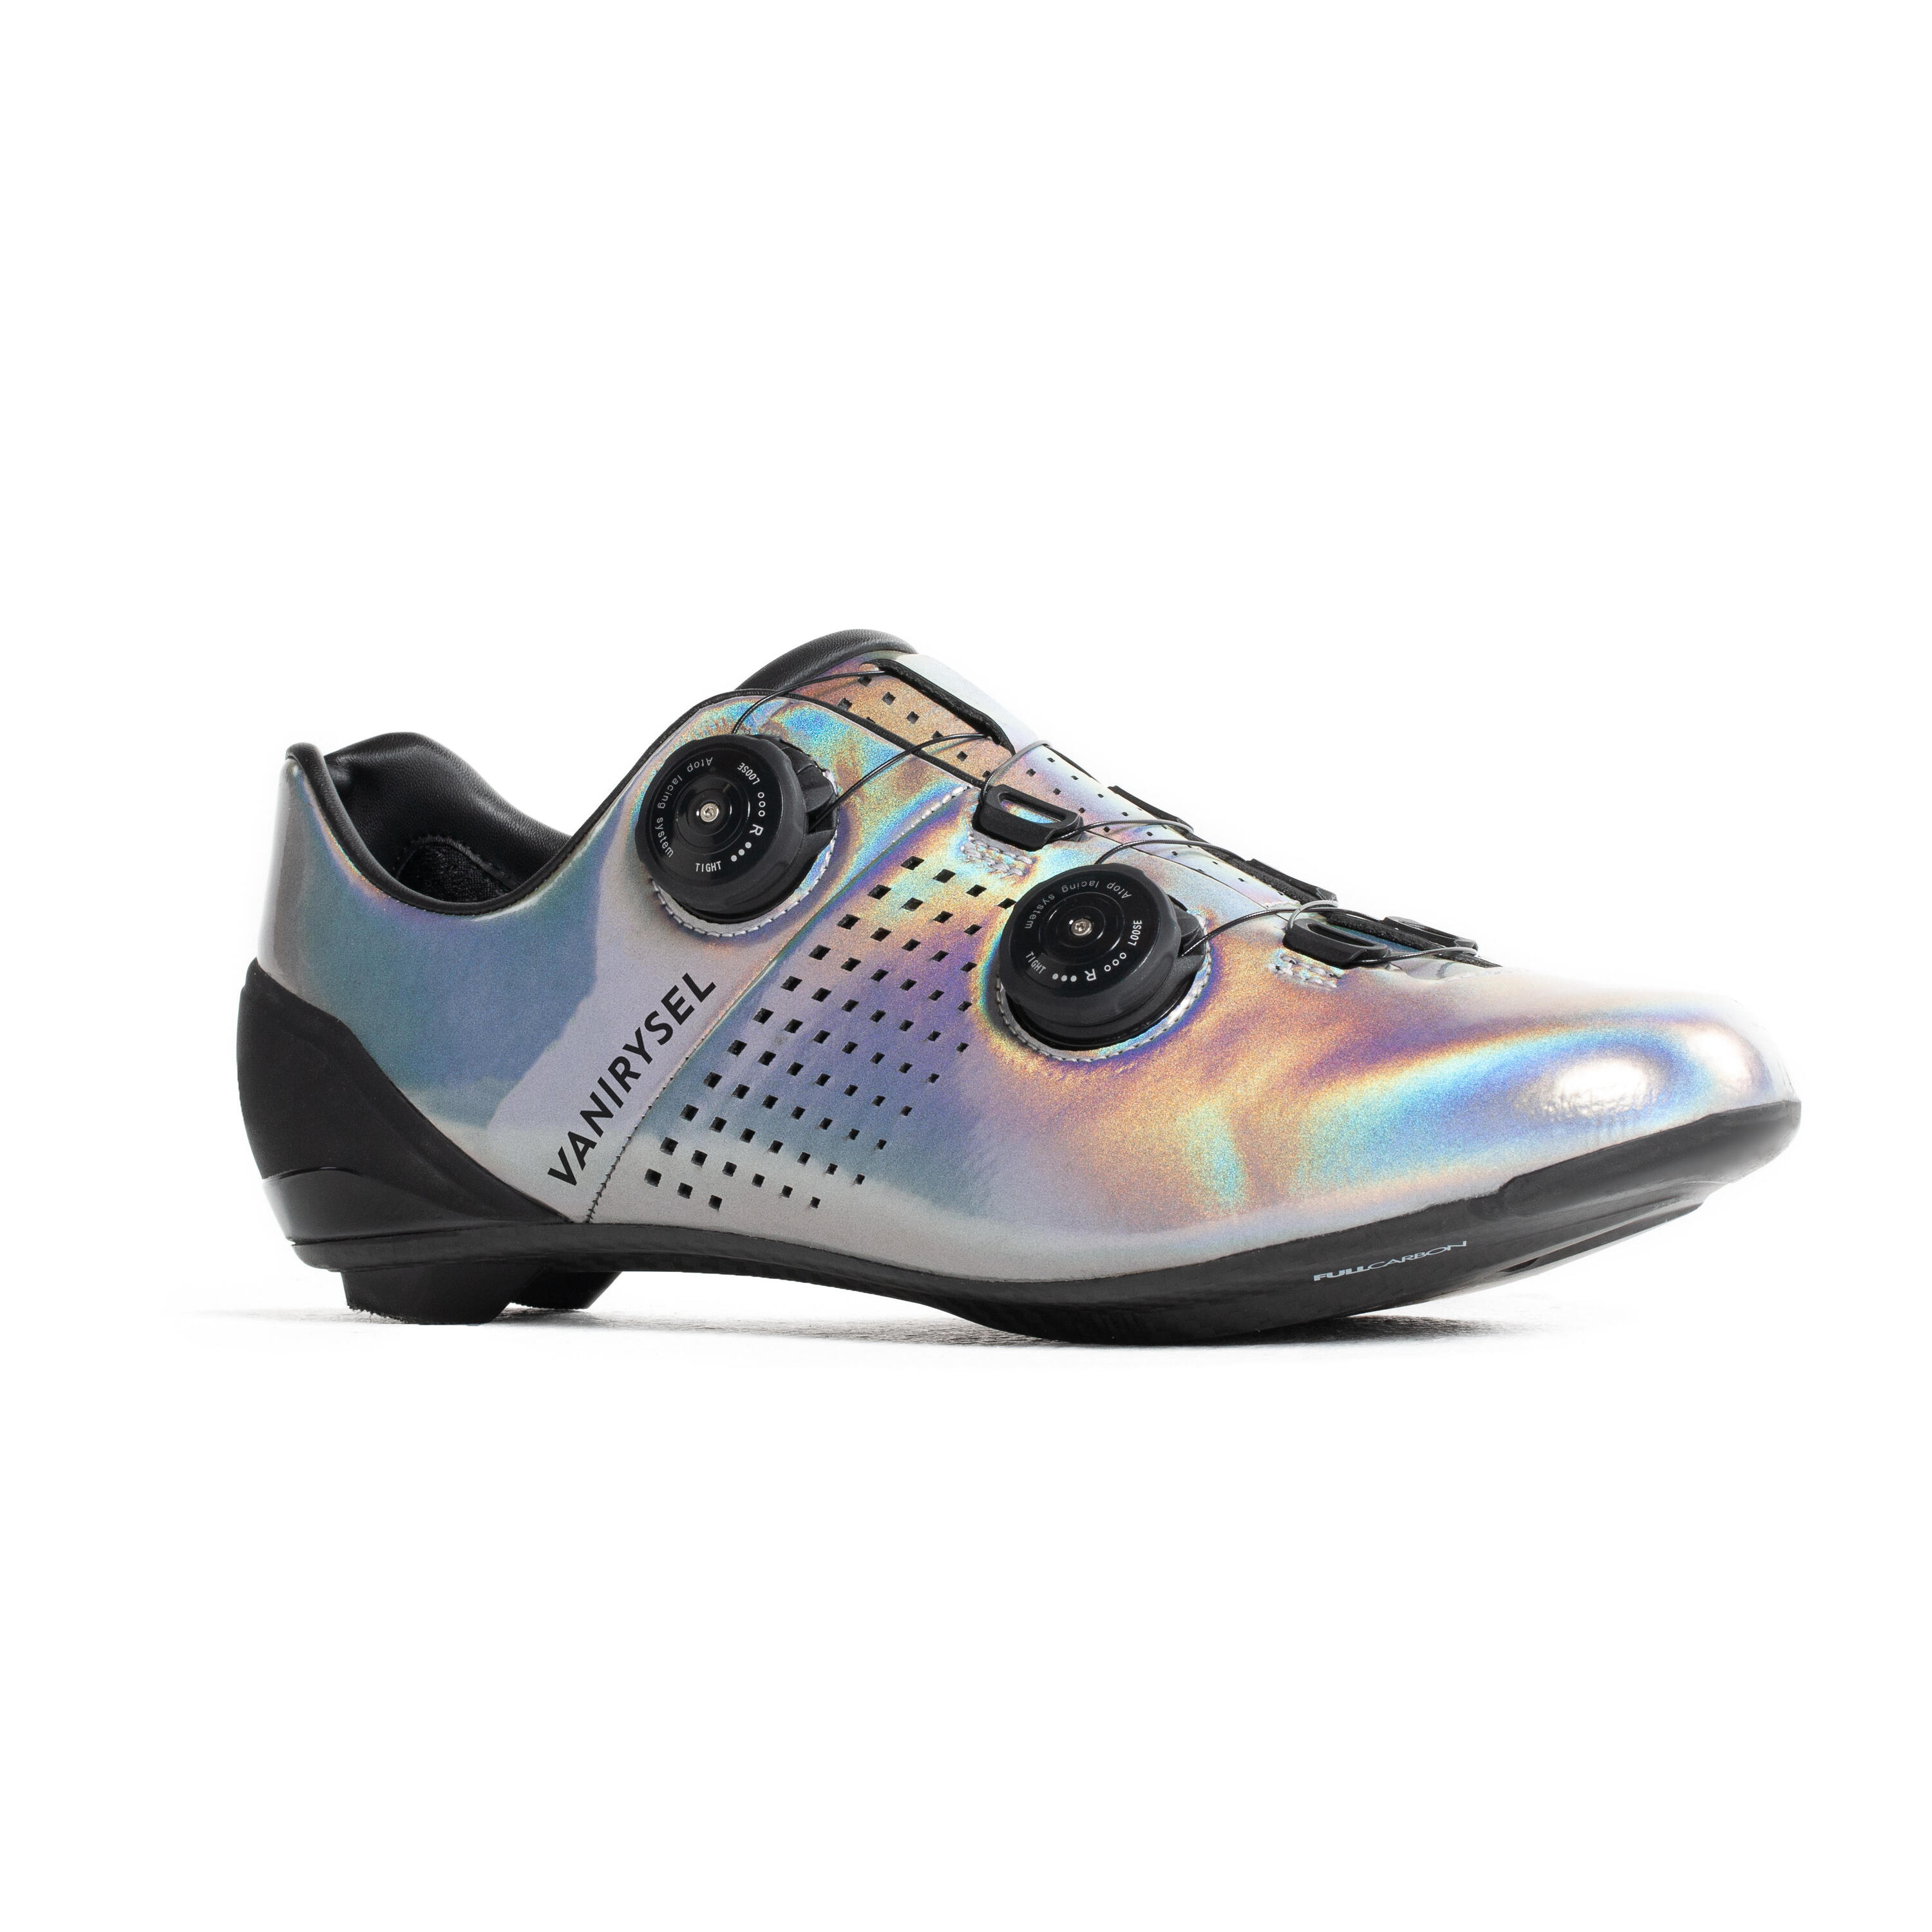 Van Rysel Sport Cycling Shoes - Iridescent Grey 2/9